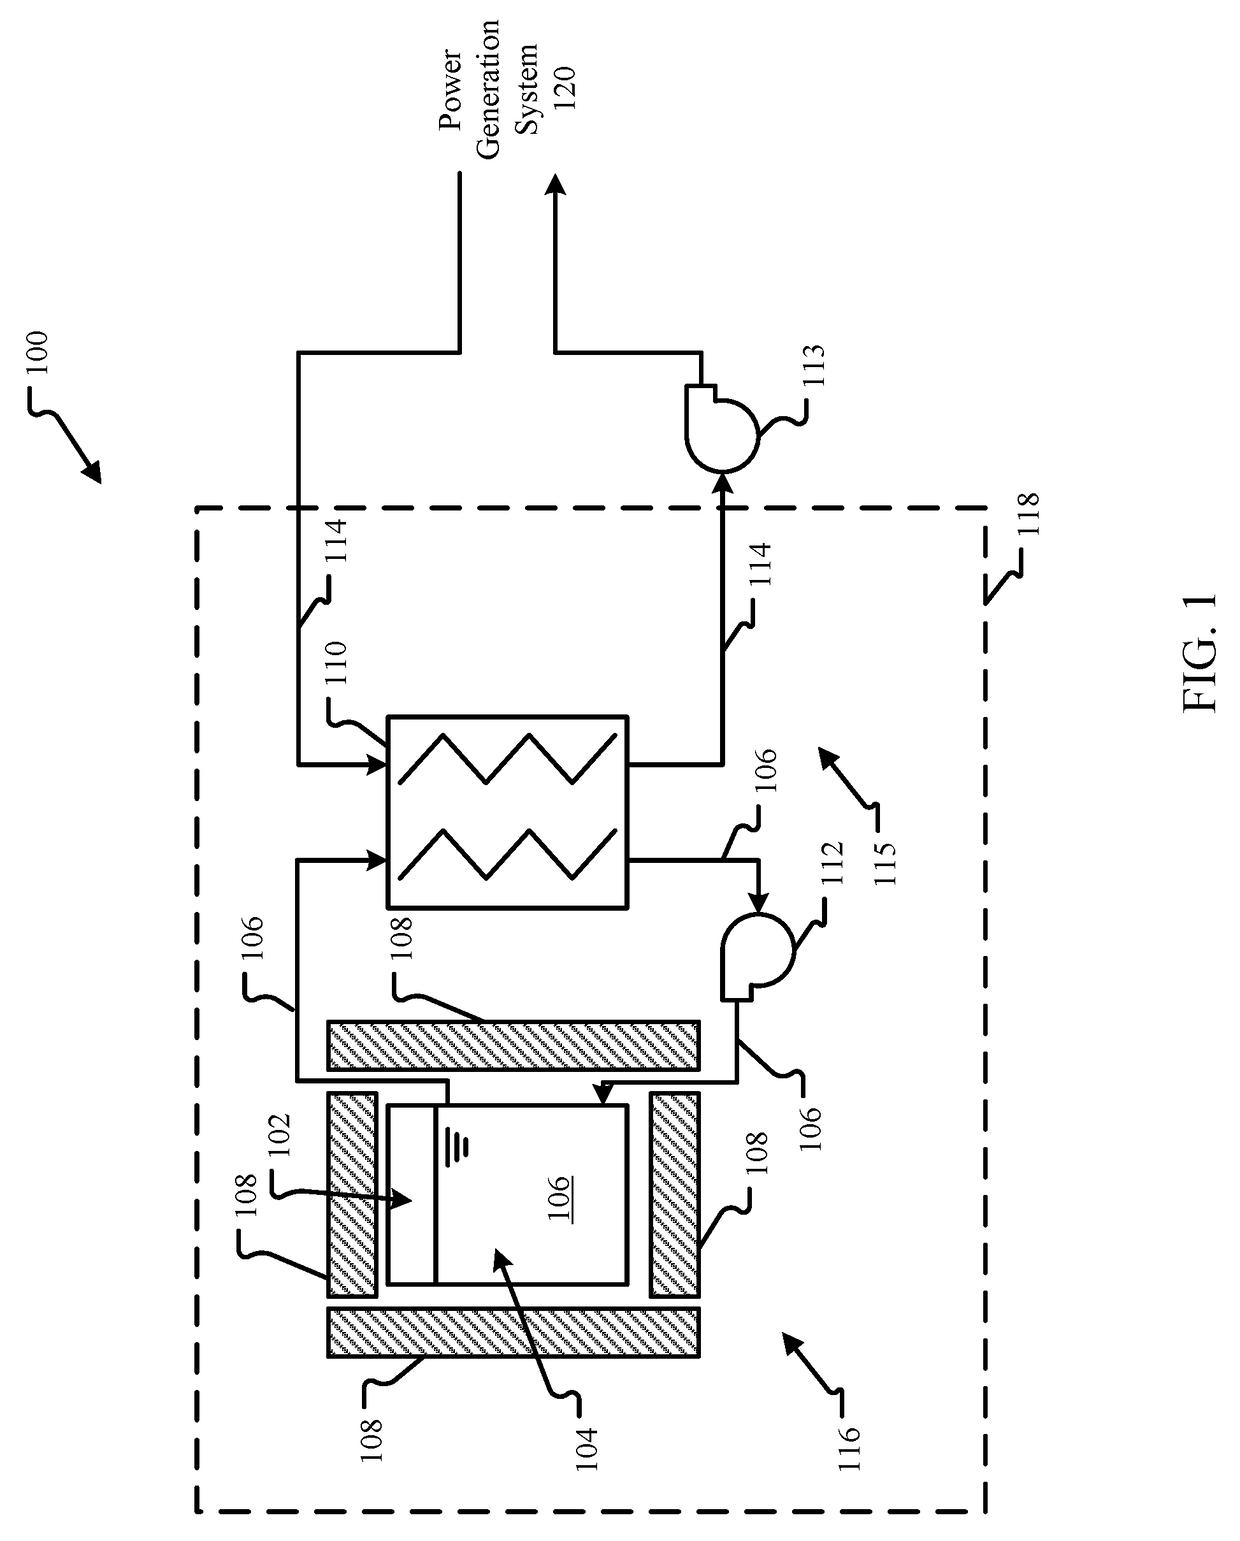 Molten fuel reactor cooling and pump configurations